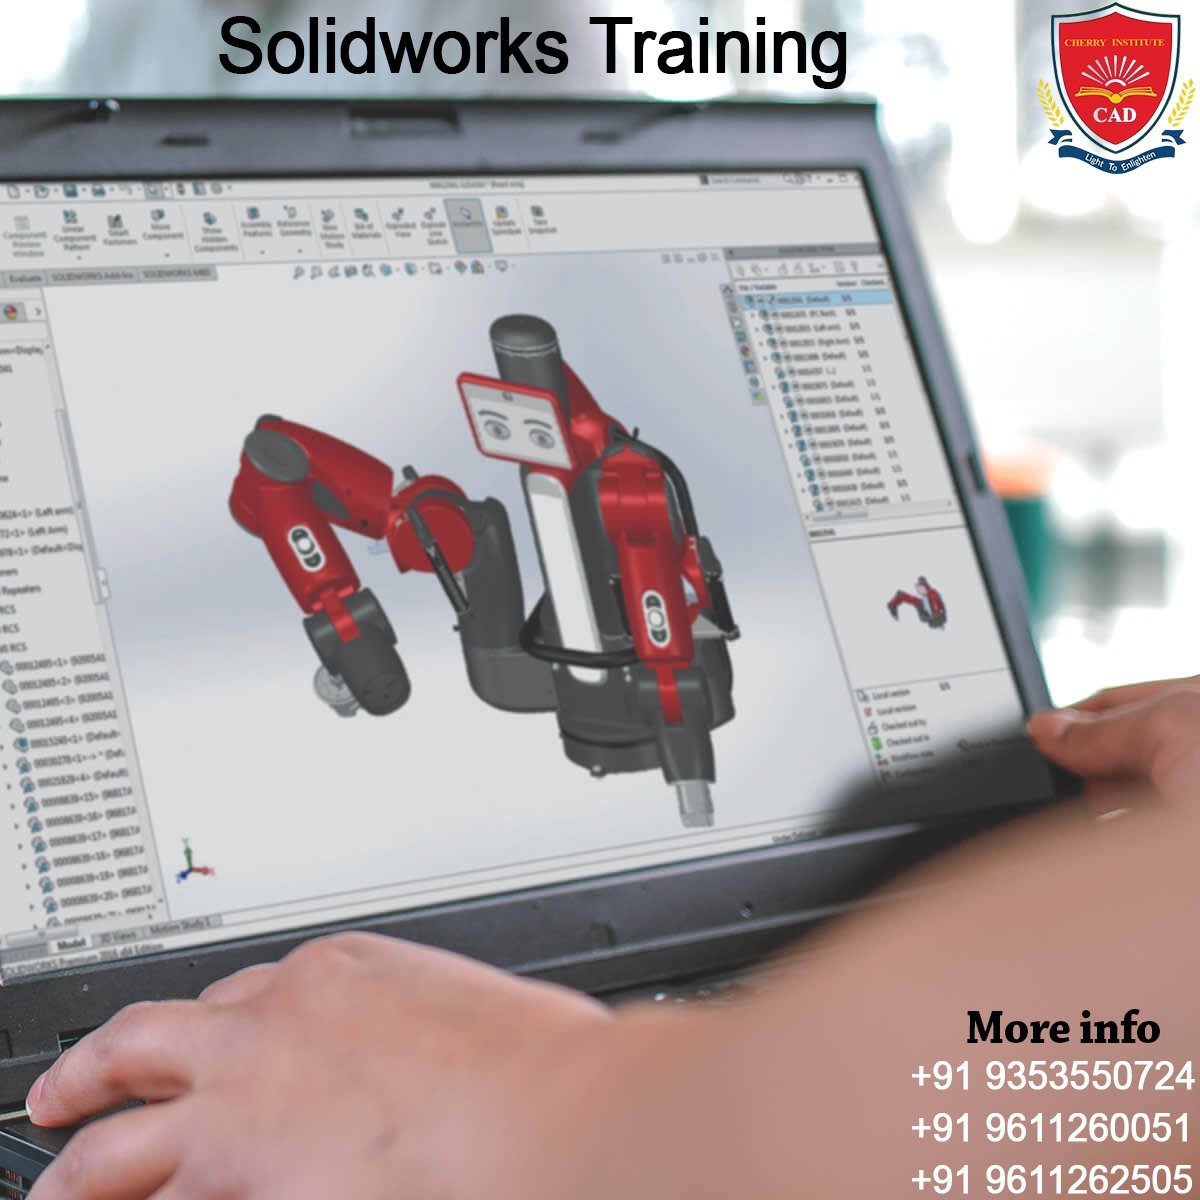 Solidworks Training in Marathahalli - Cherry Institute